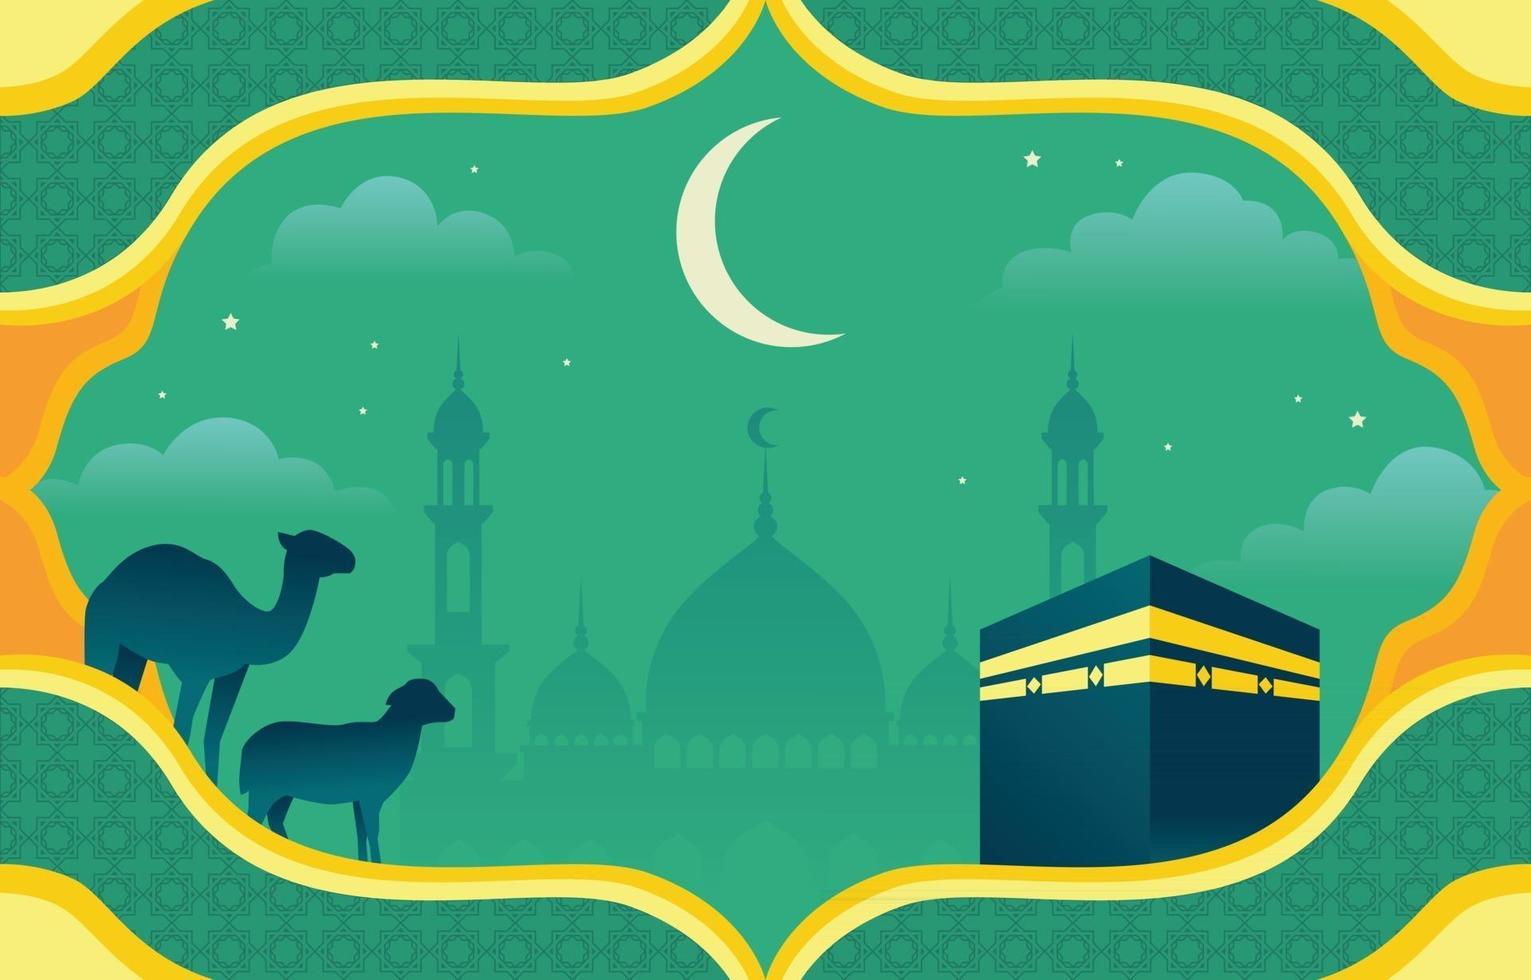 Eid Al Adha Background vector